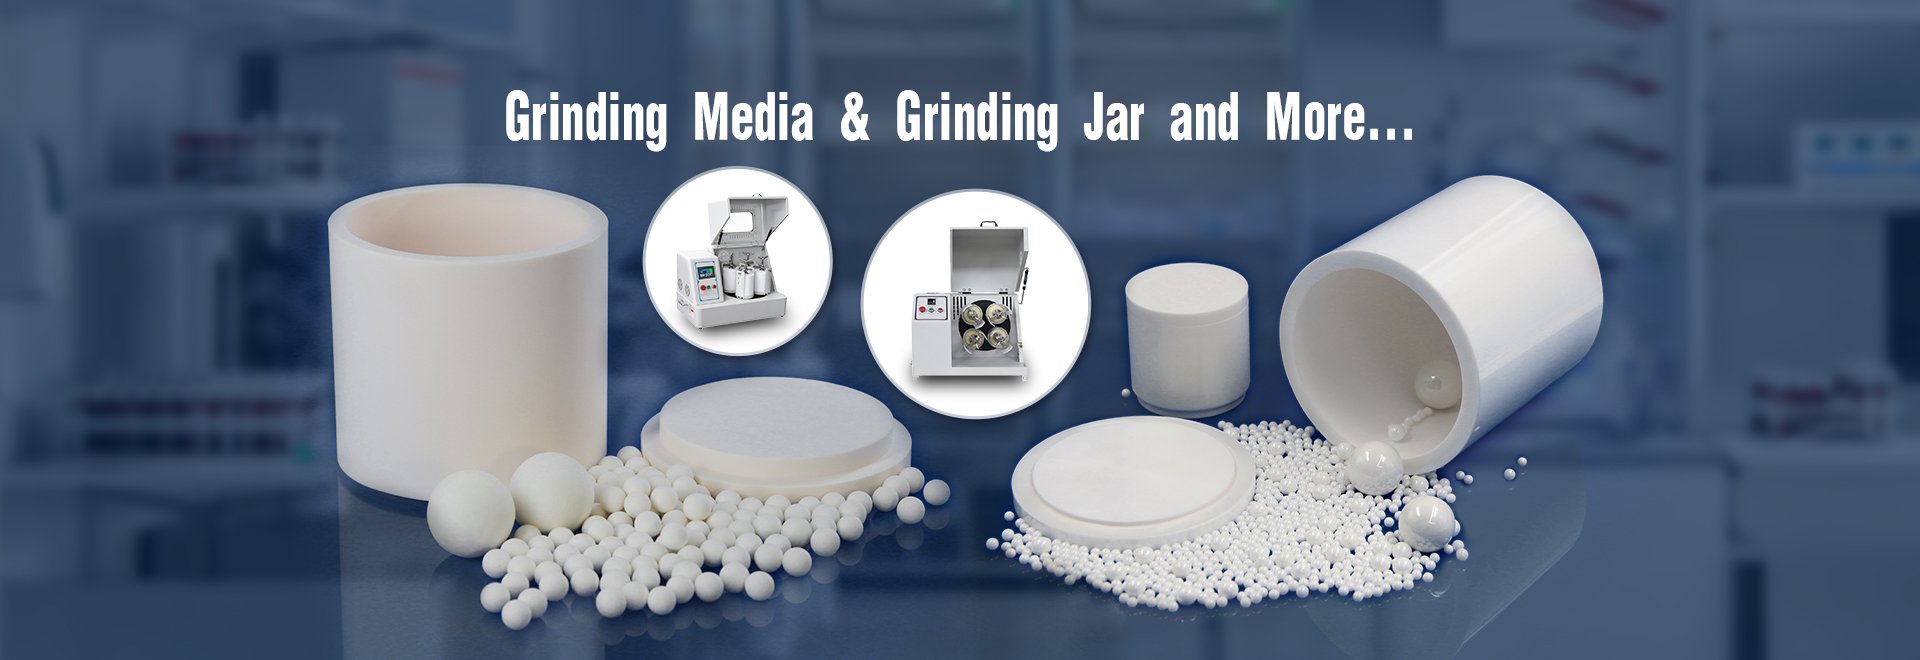 Grinding Media & Grinding Jar and More